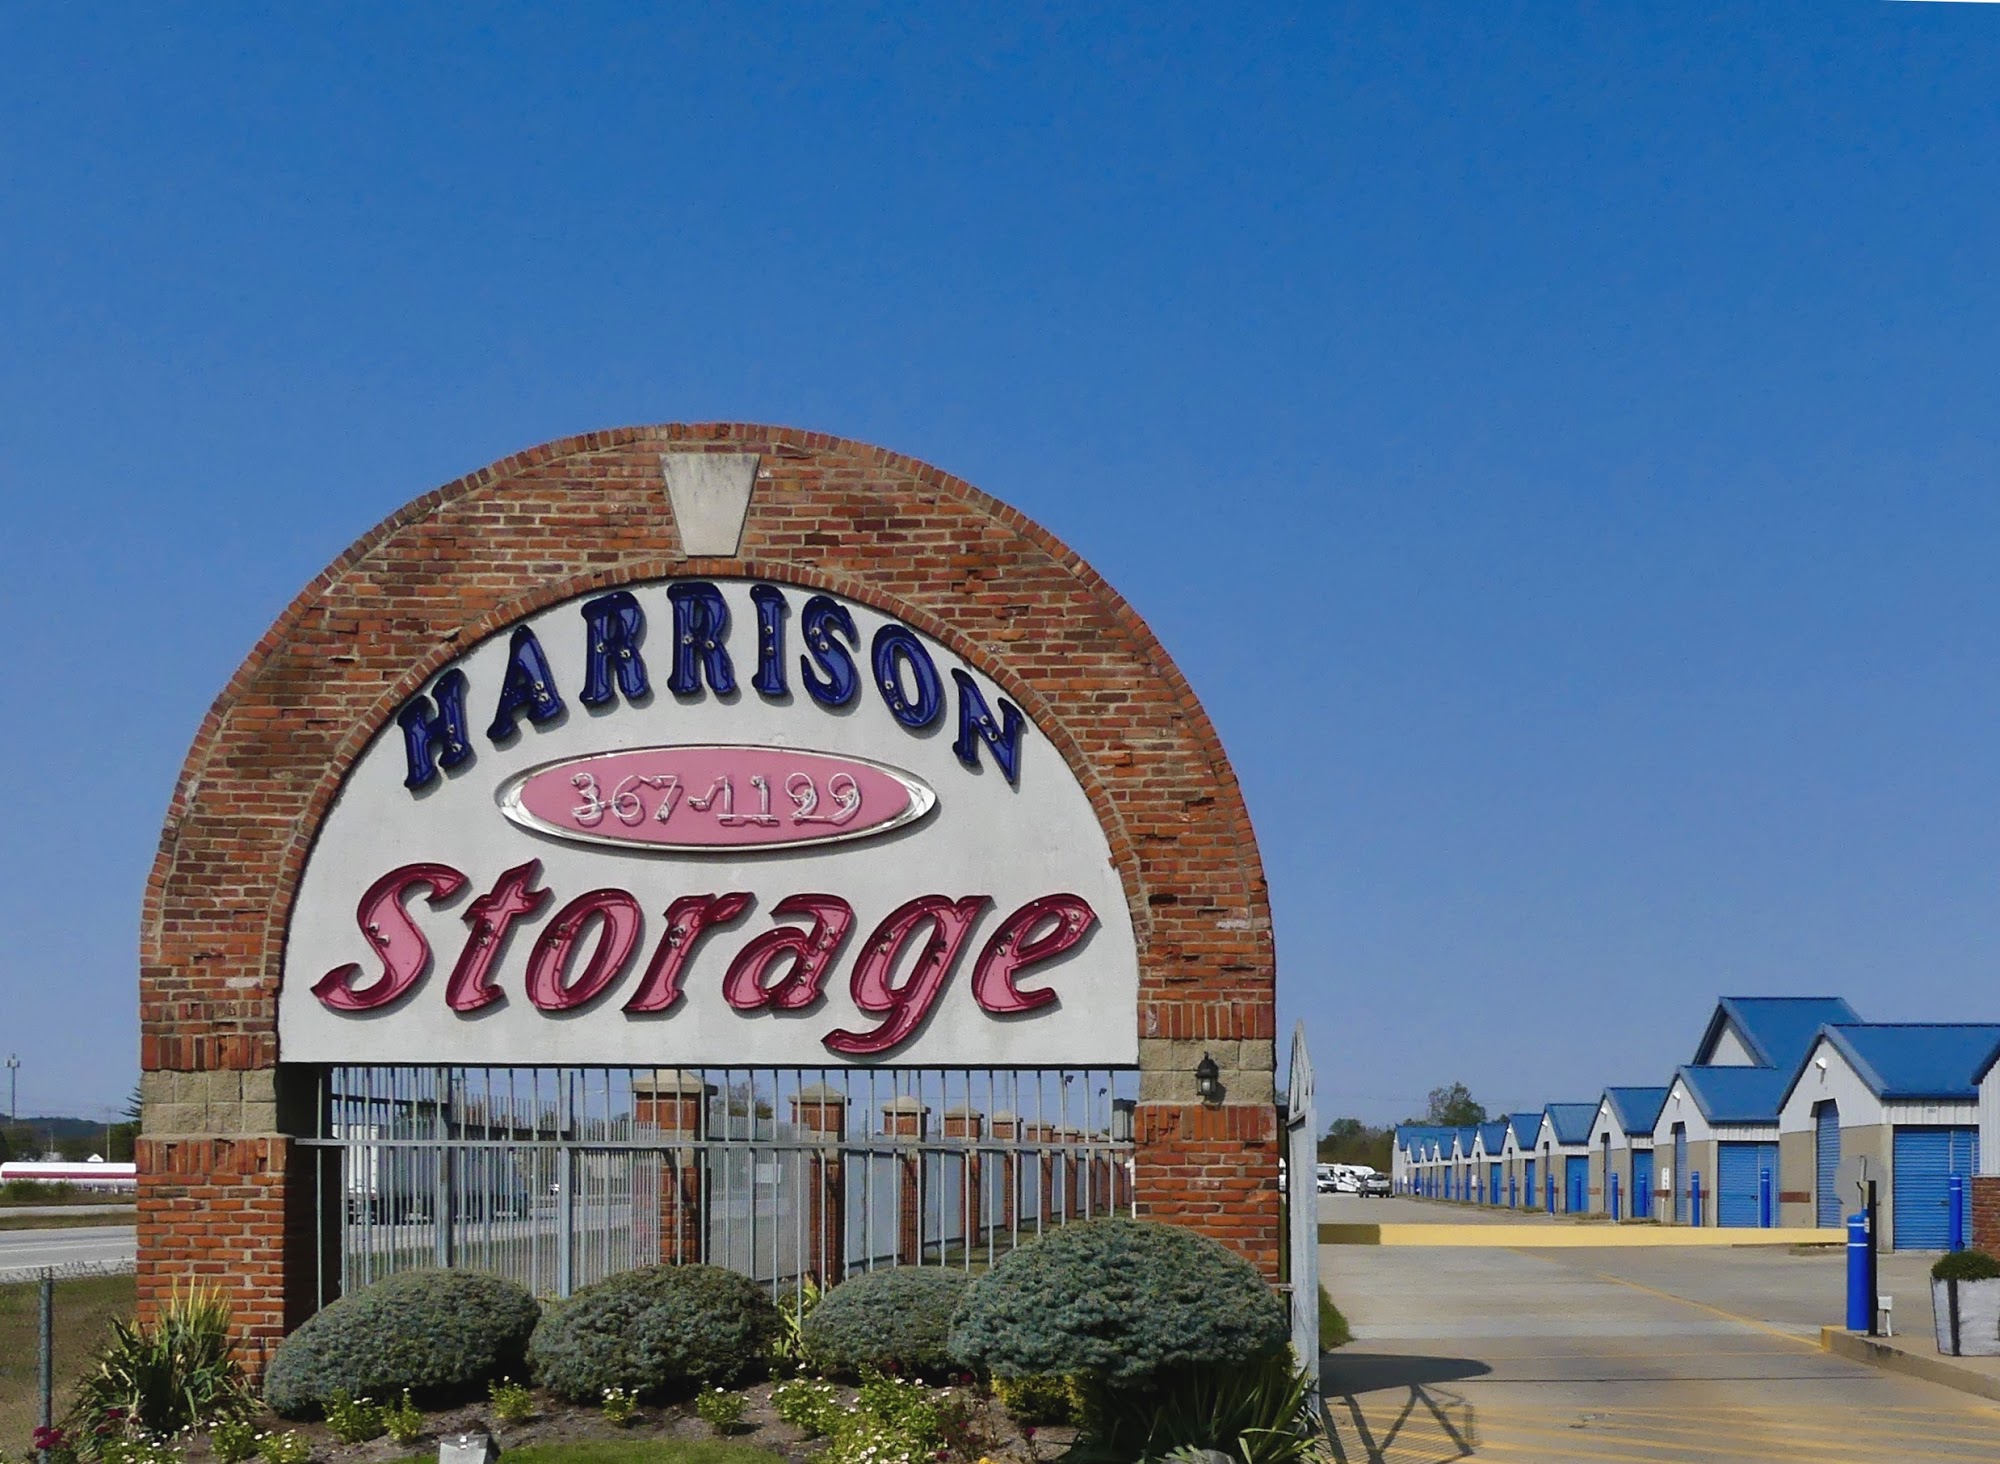 Harrison Self Storage